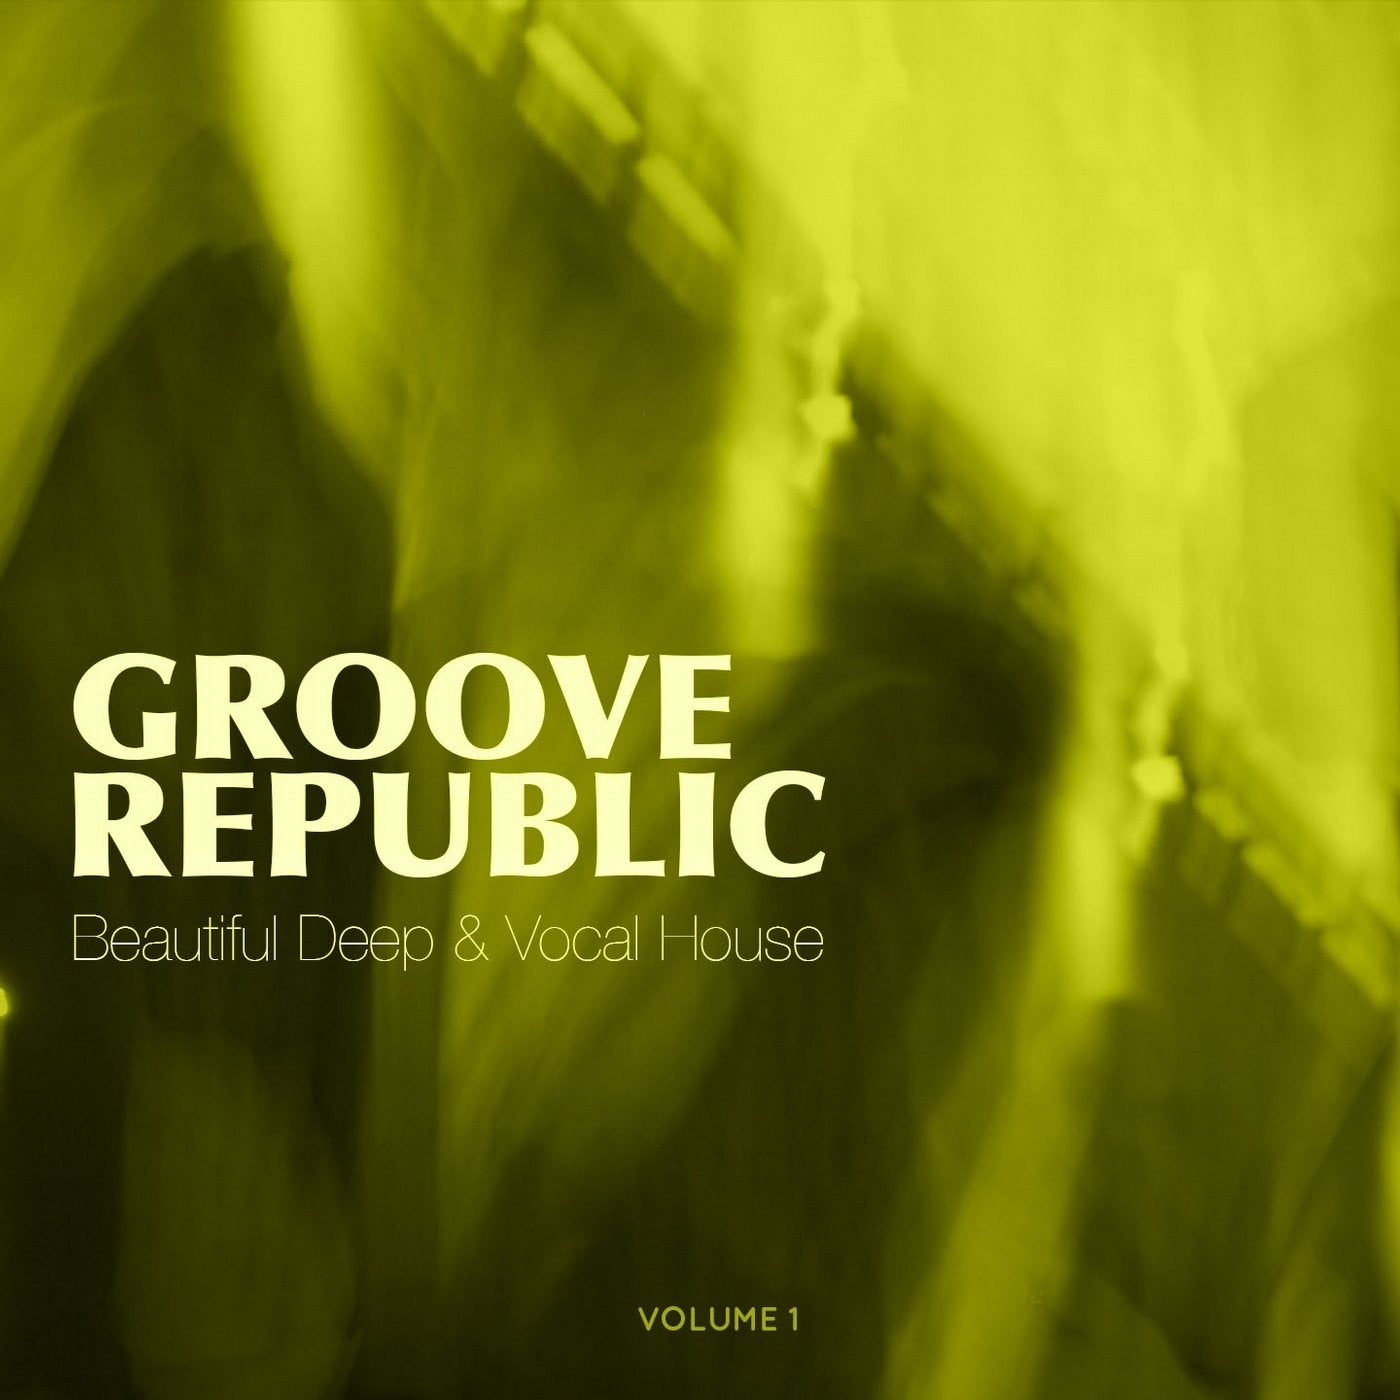 Groove Republic, Vol. 1 (Beautiful Deep & Vocal House)